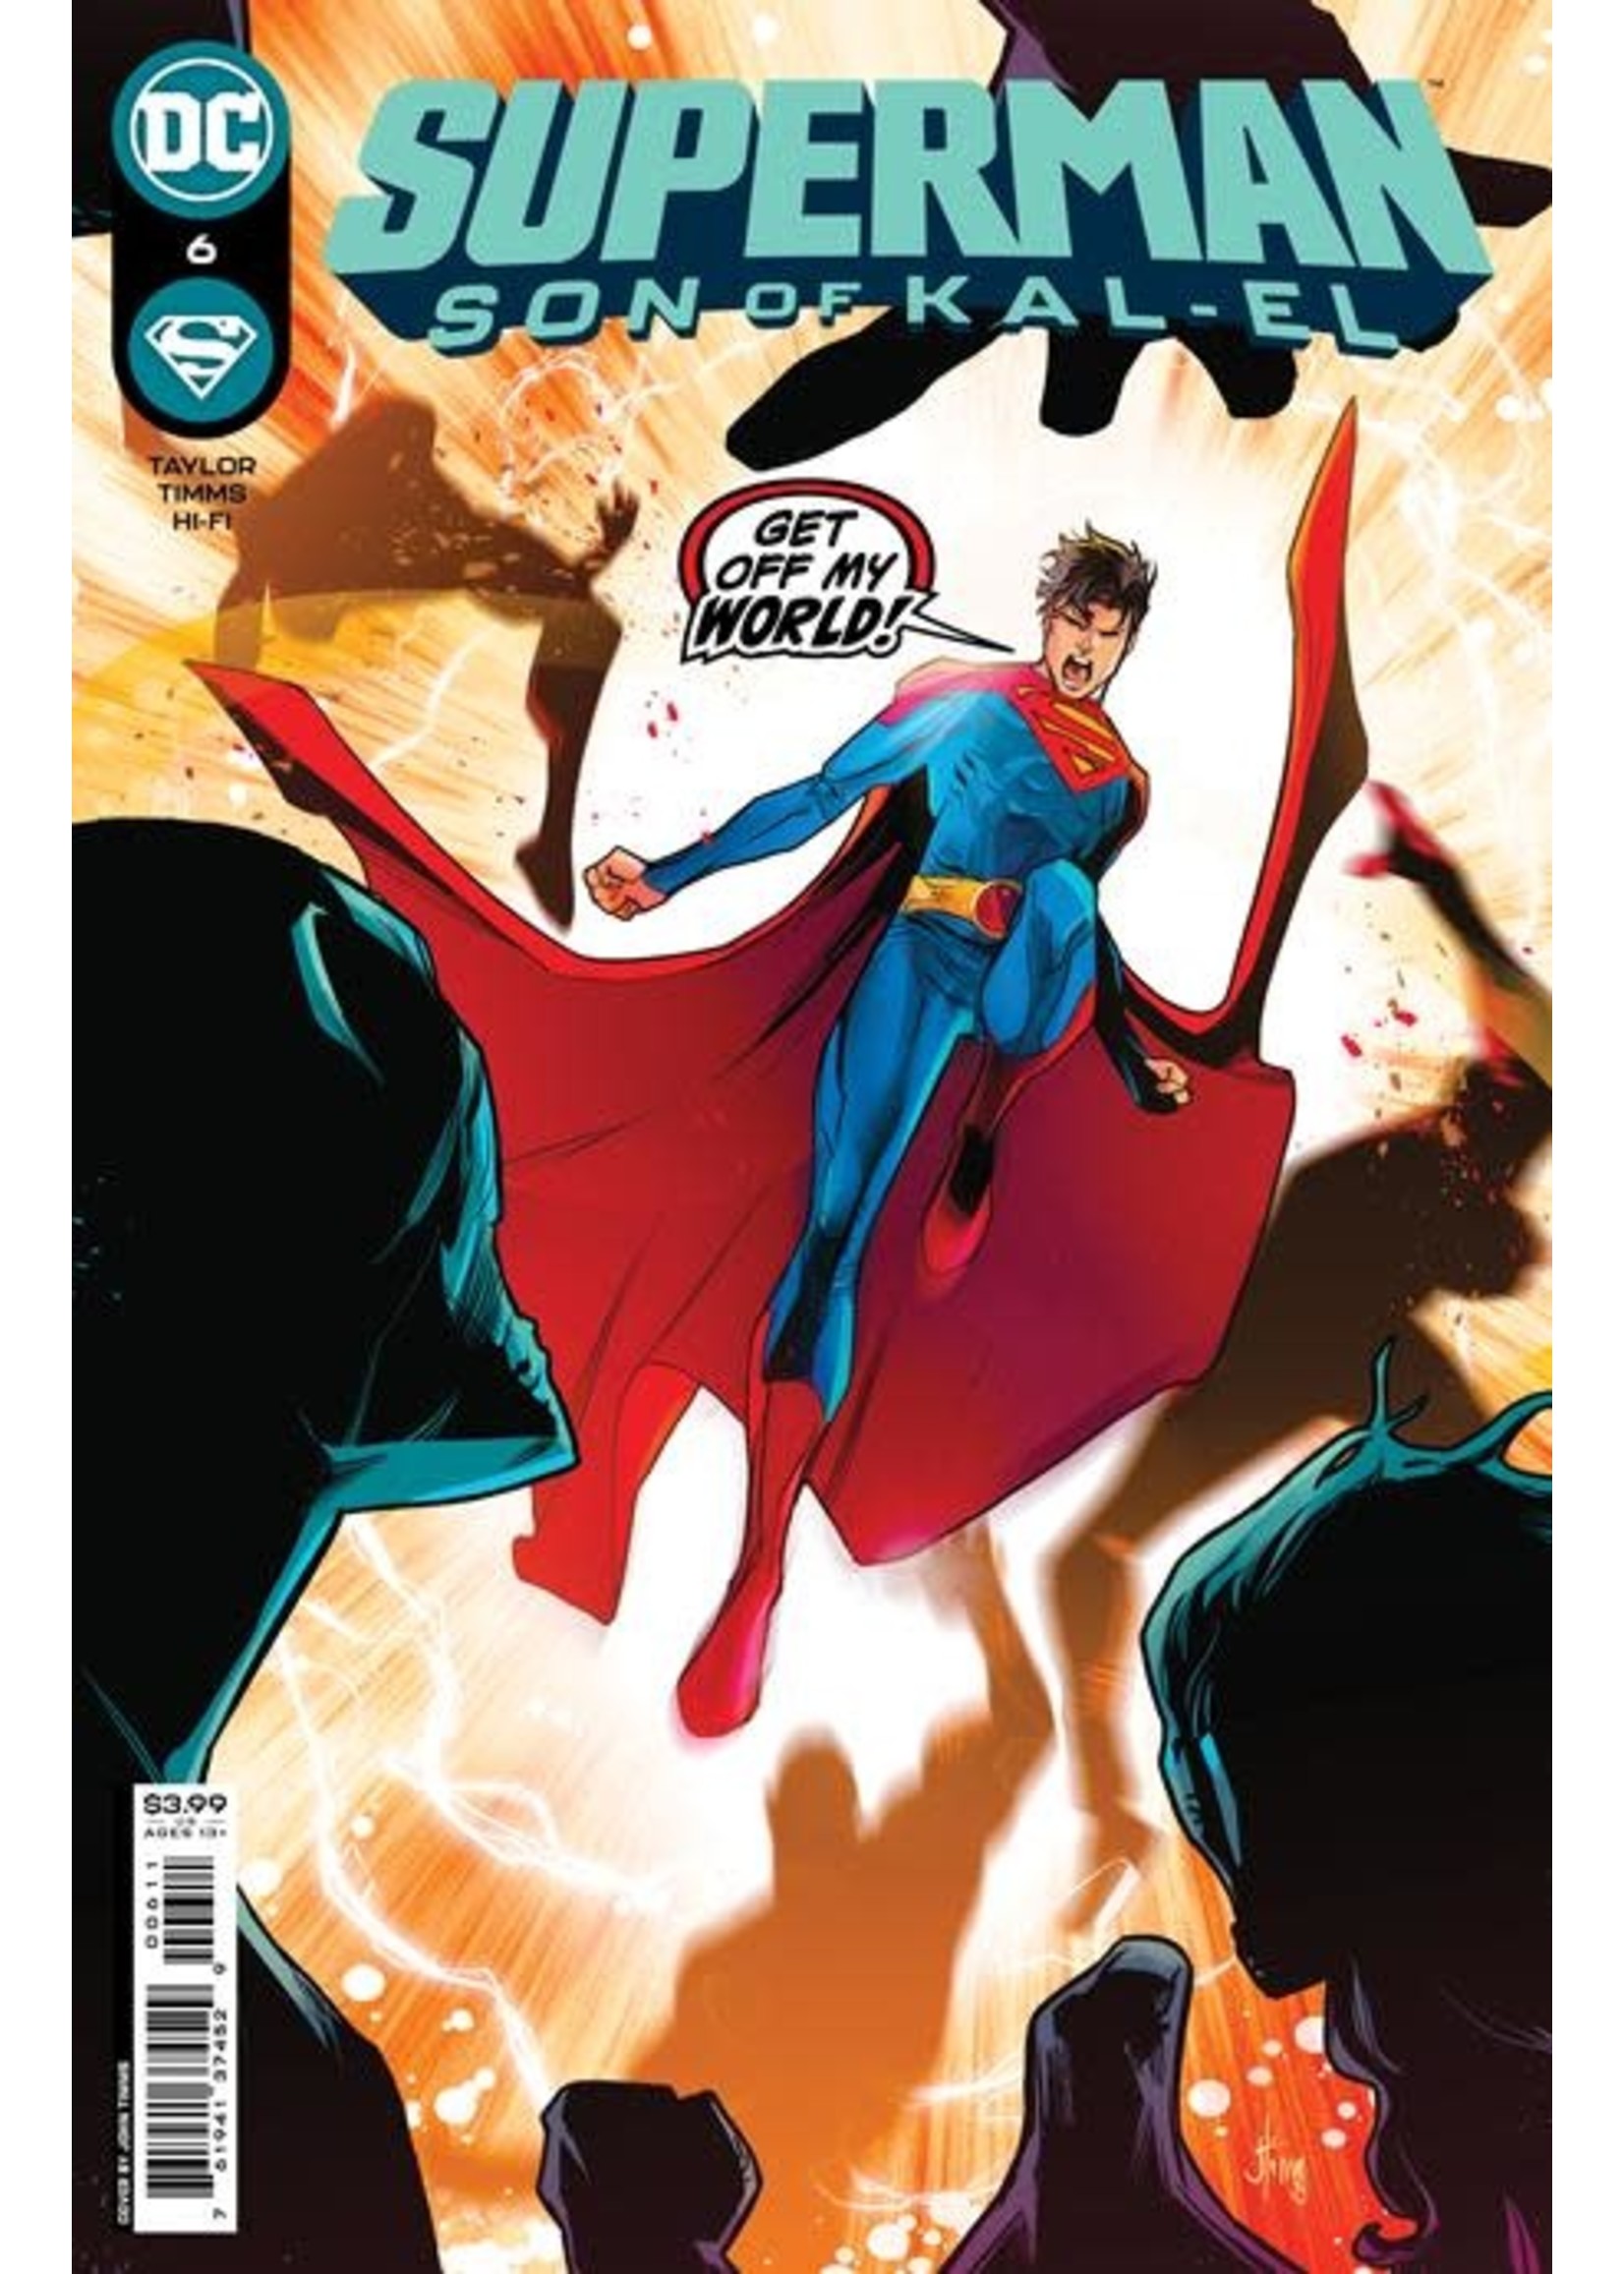 Superman Superman Son of Kal-El #06